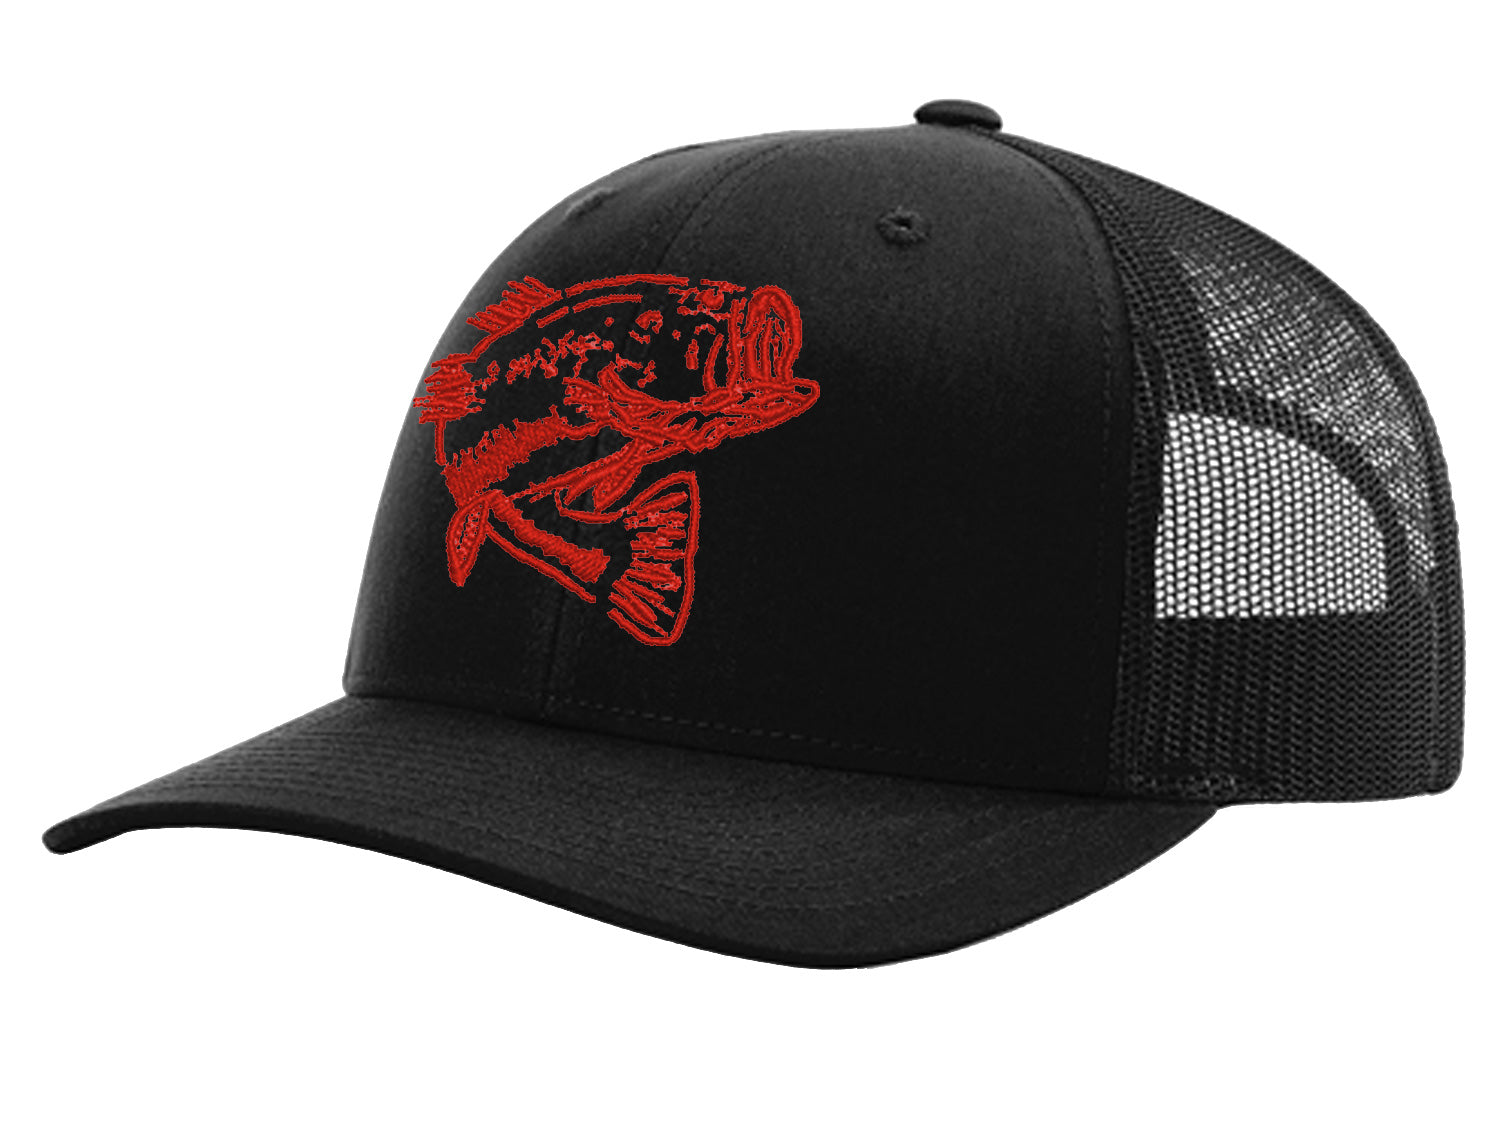 Redfish Fishing Trucker Snapback Hats by Reel Fishy Apparel -*9 Colors! Black Solid